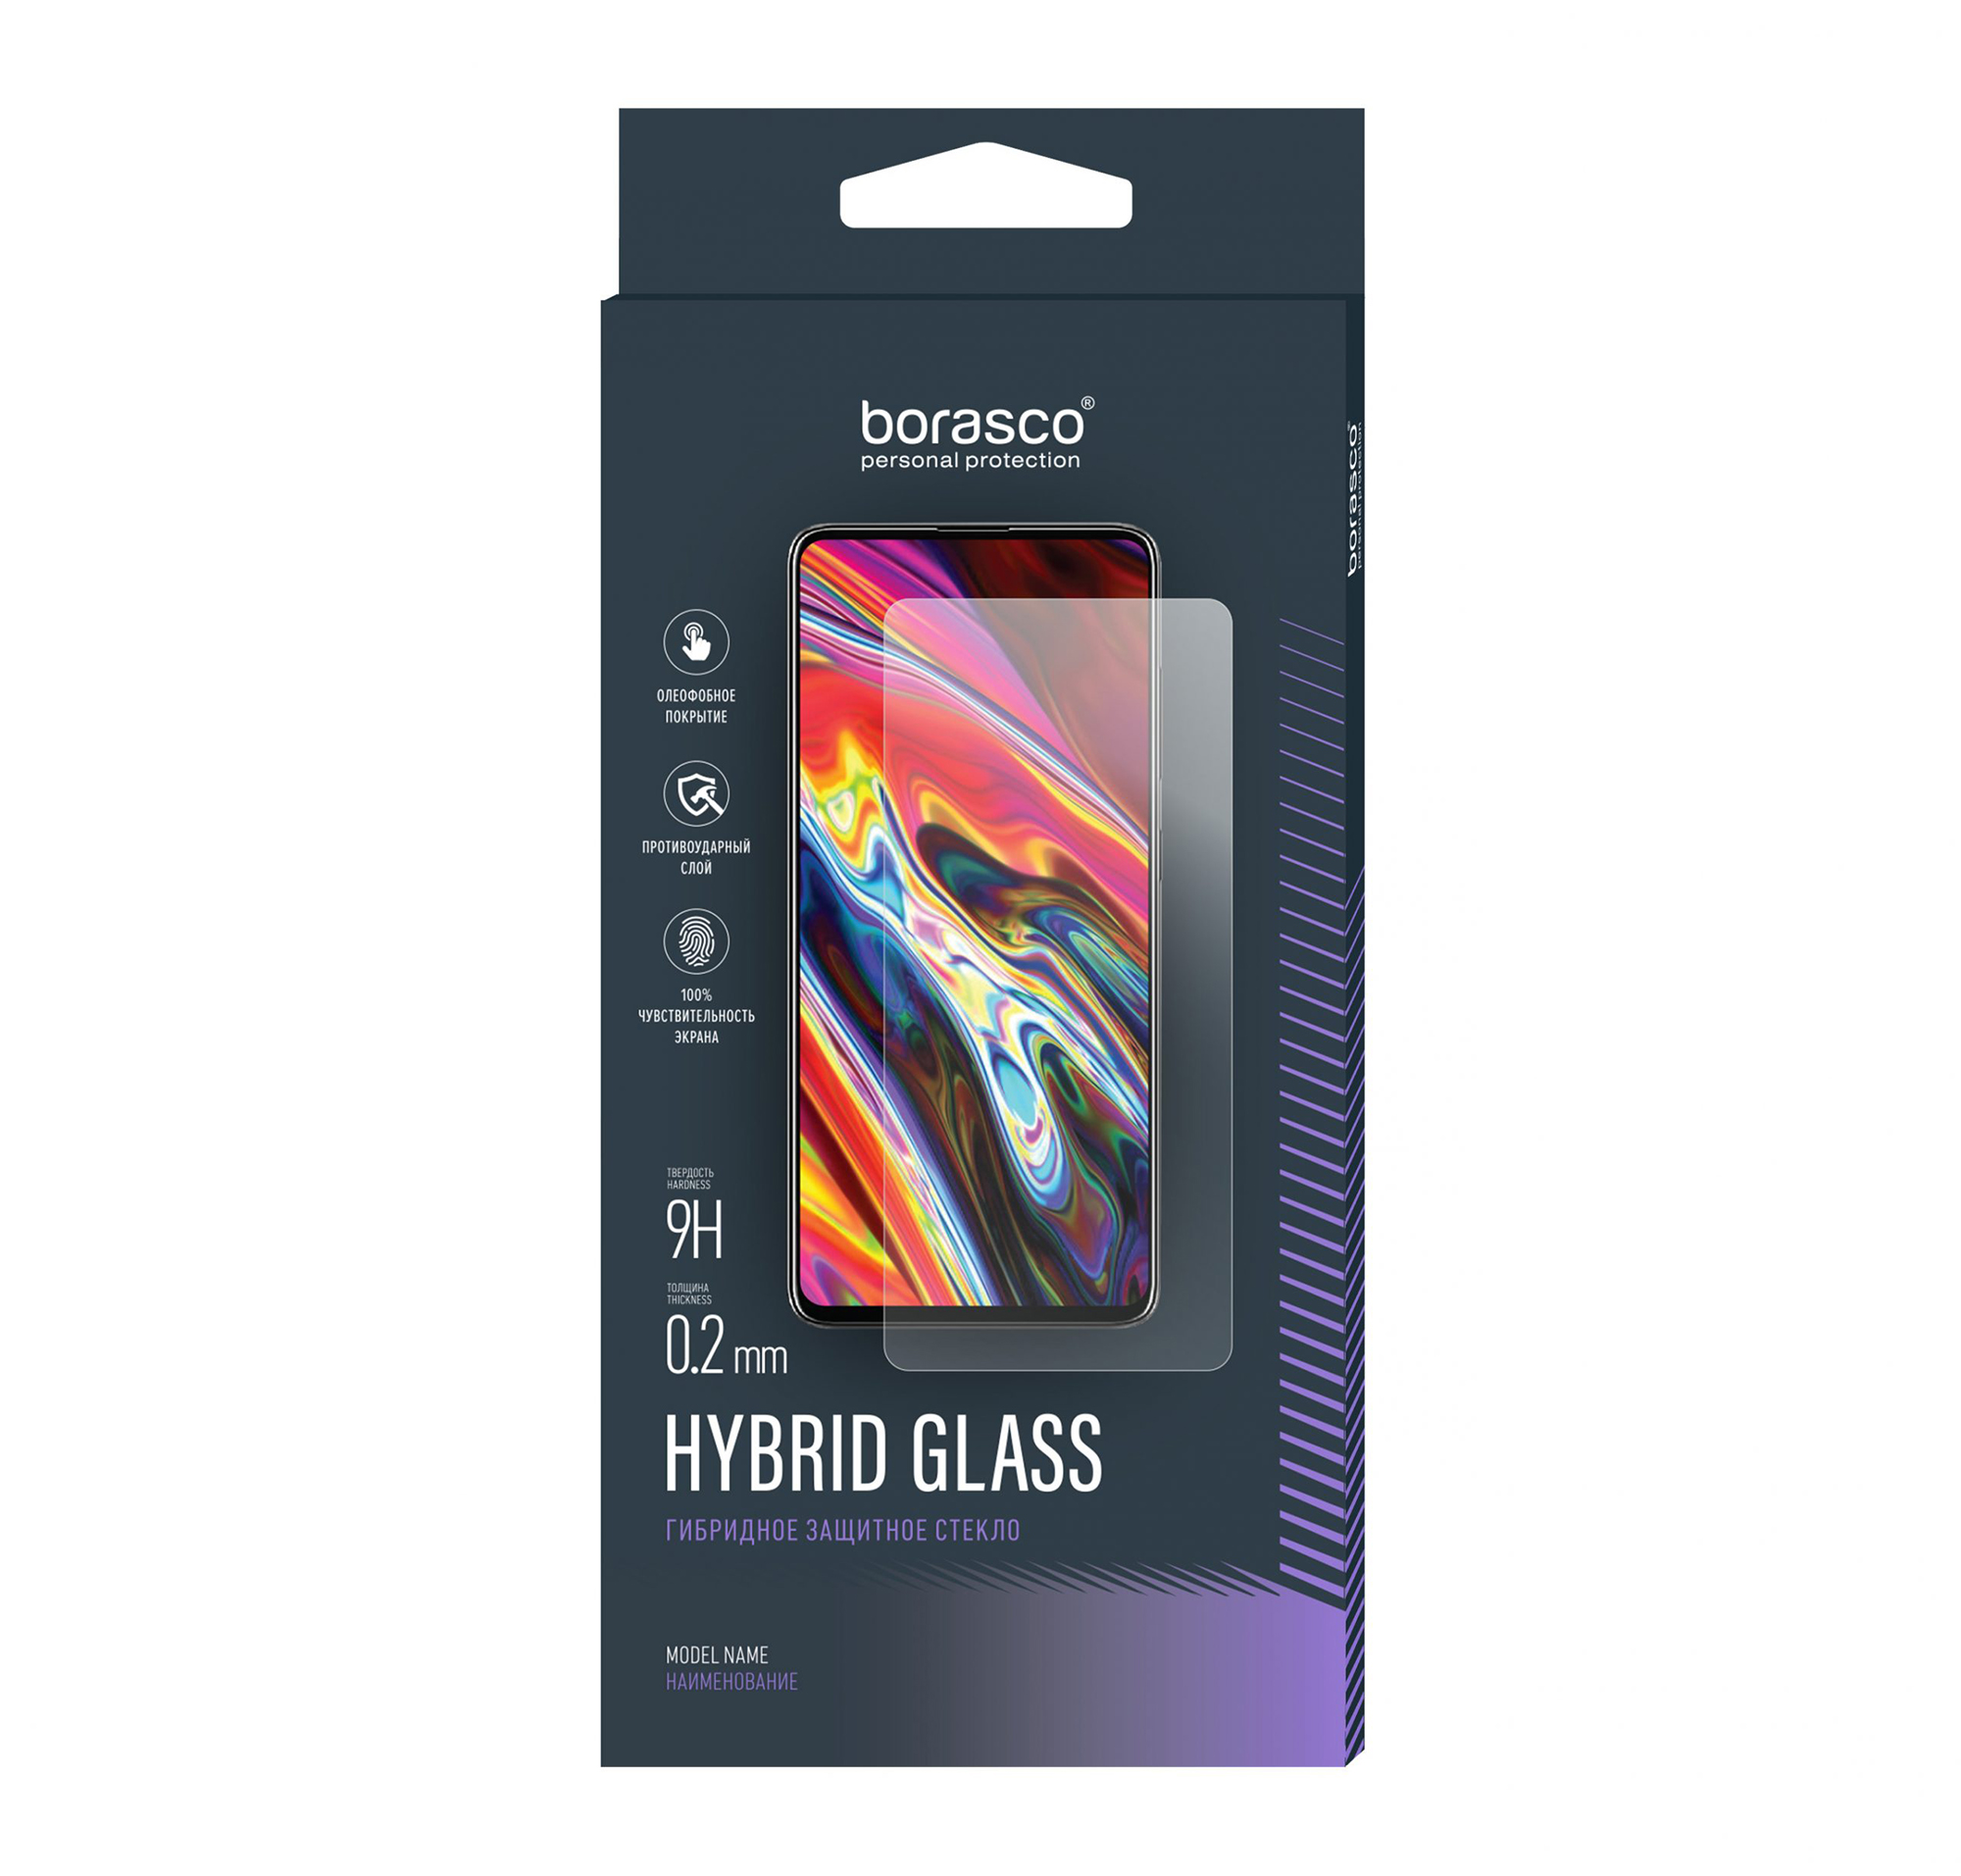 Защитное стекло Hybrid Glass для OPPO Reno 4 lite 4 в 1 для oppo reno 4 pro 5g стекло для reno 4 pro 5g телефон flim защитное стекло для экрана protetor для reno 4 pro 5g стекло объектива